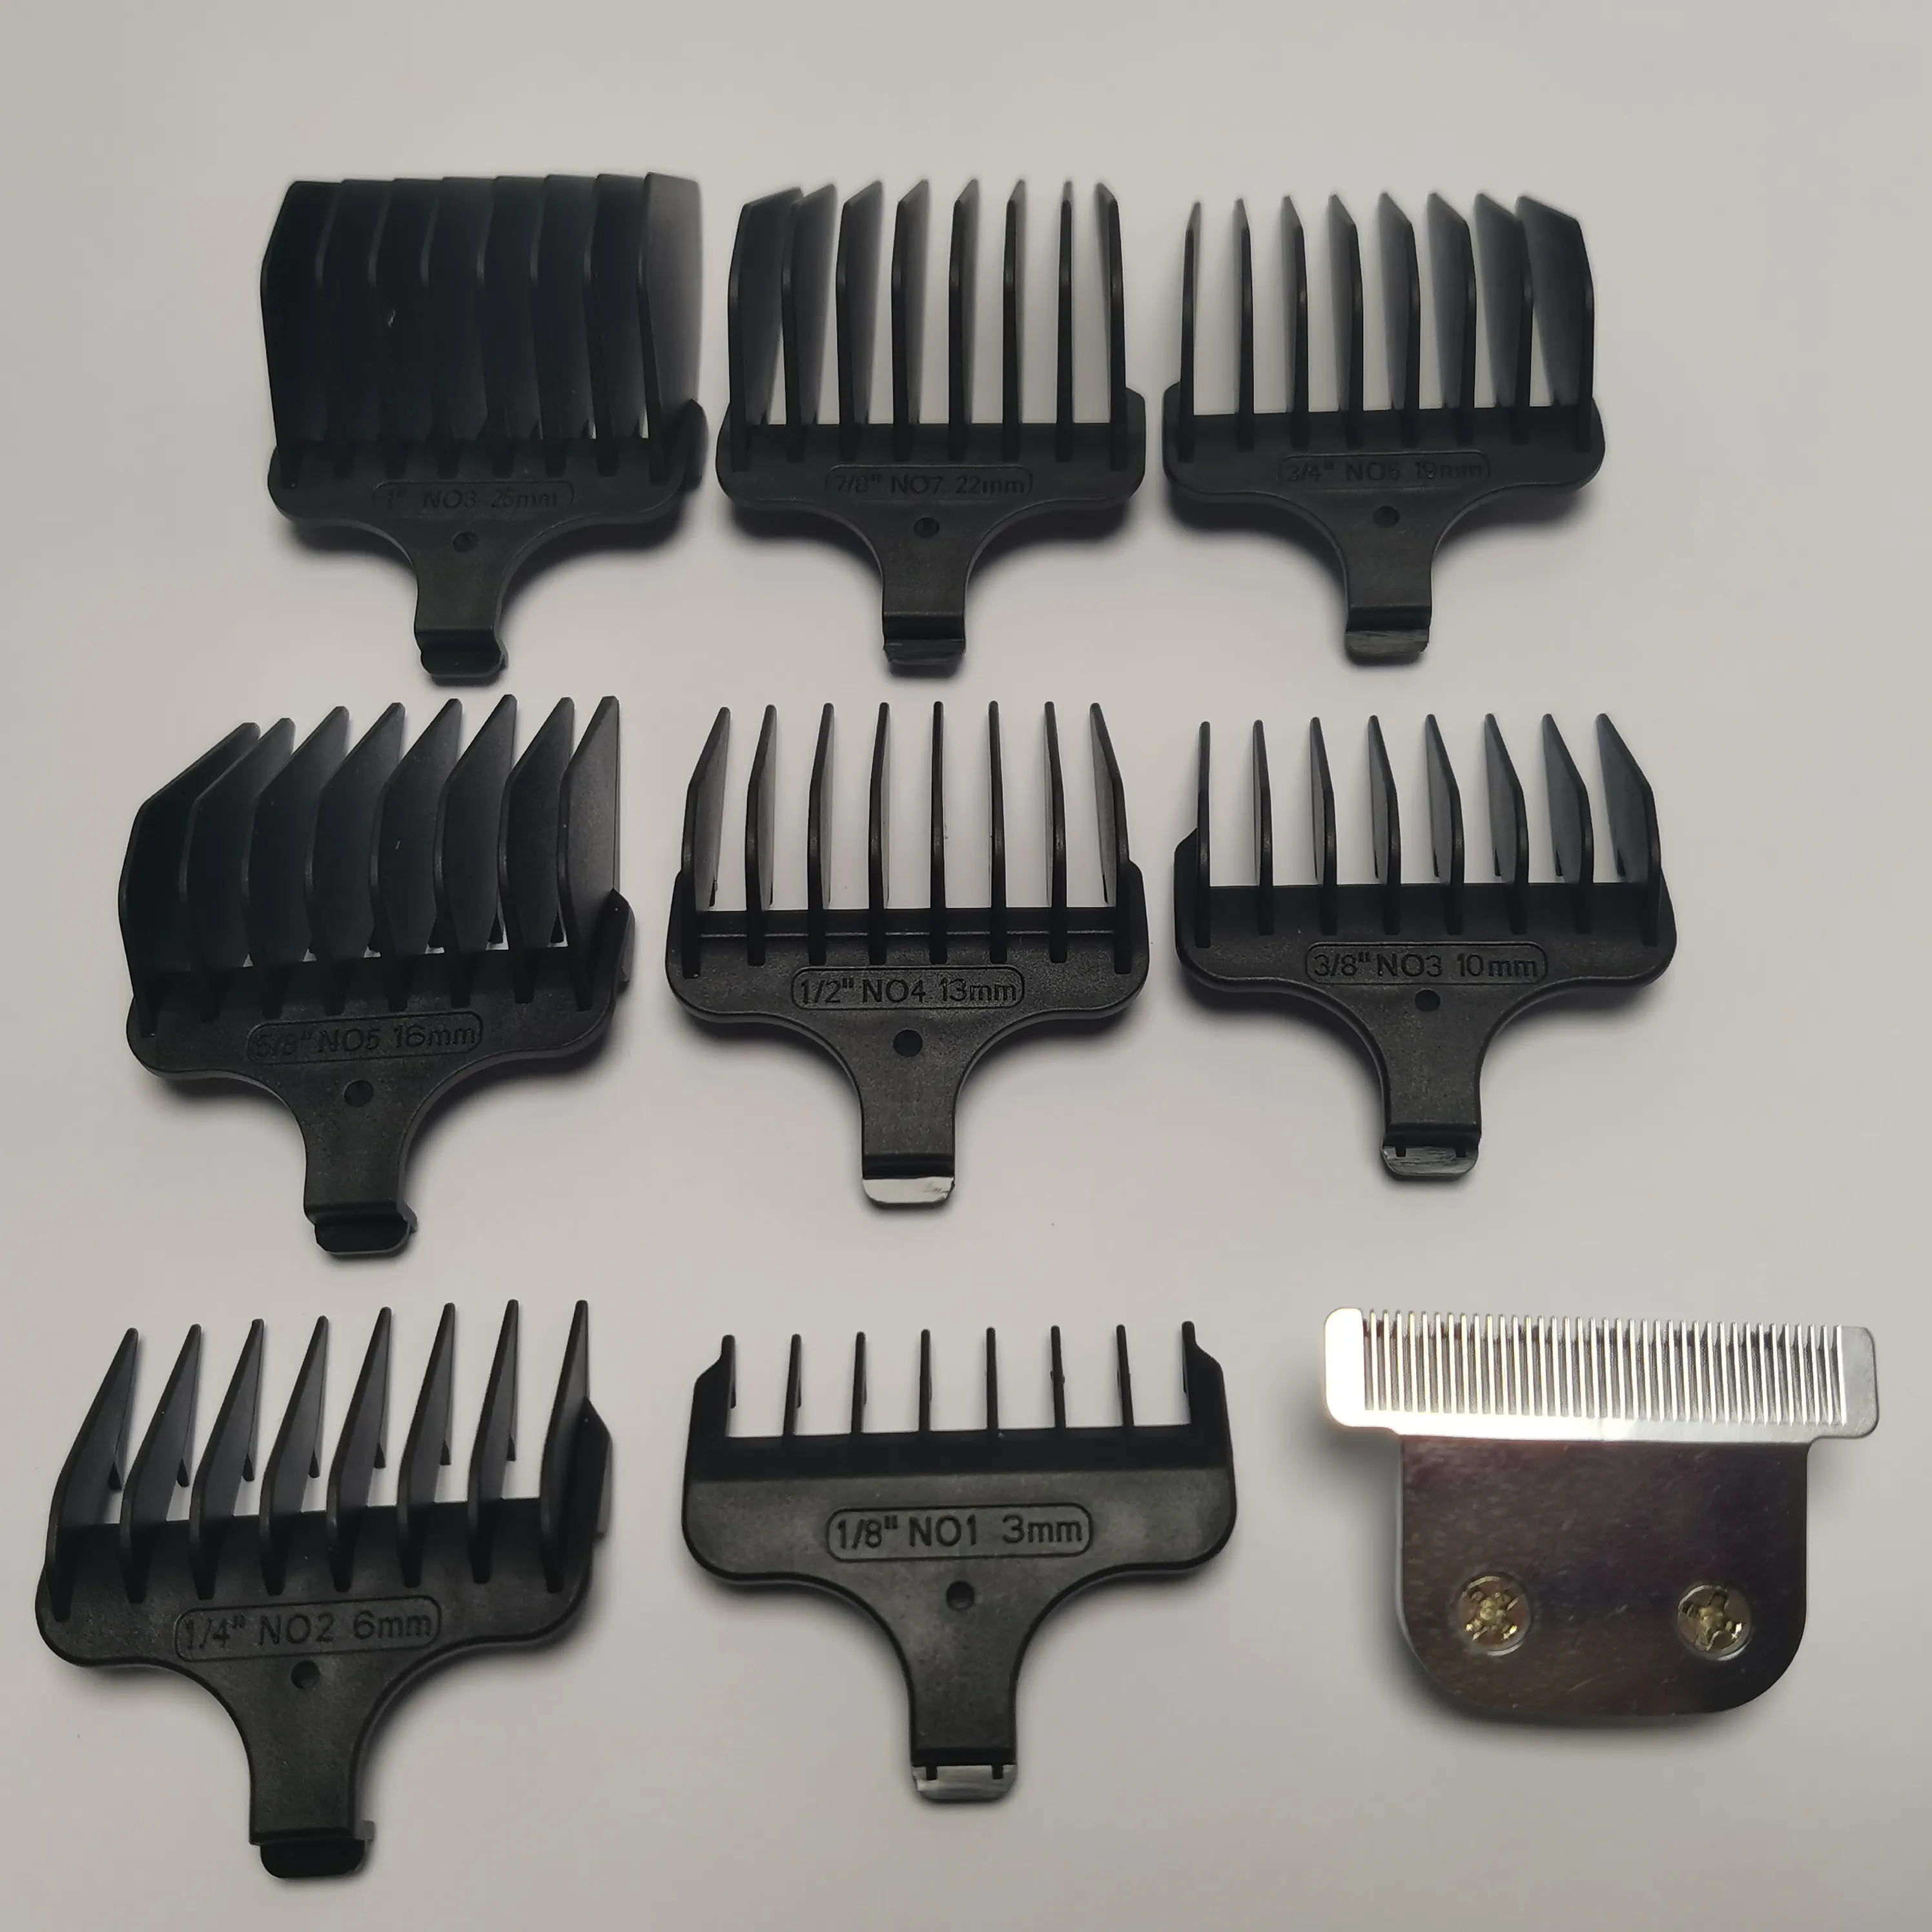 1st Razor T-Blade 8st Hair Clipper Comb #1- #8 Cutting 3-25mm ersättning för 9816-200 9818L 9837 9854 9854L 9894 9884